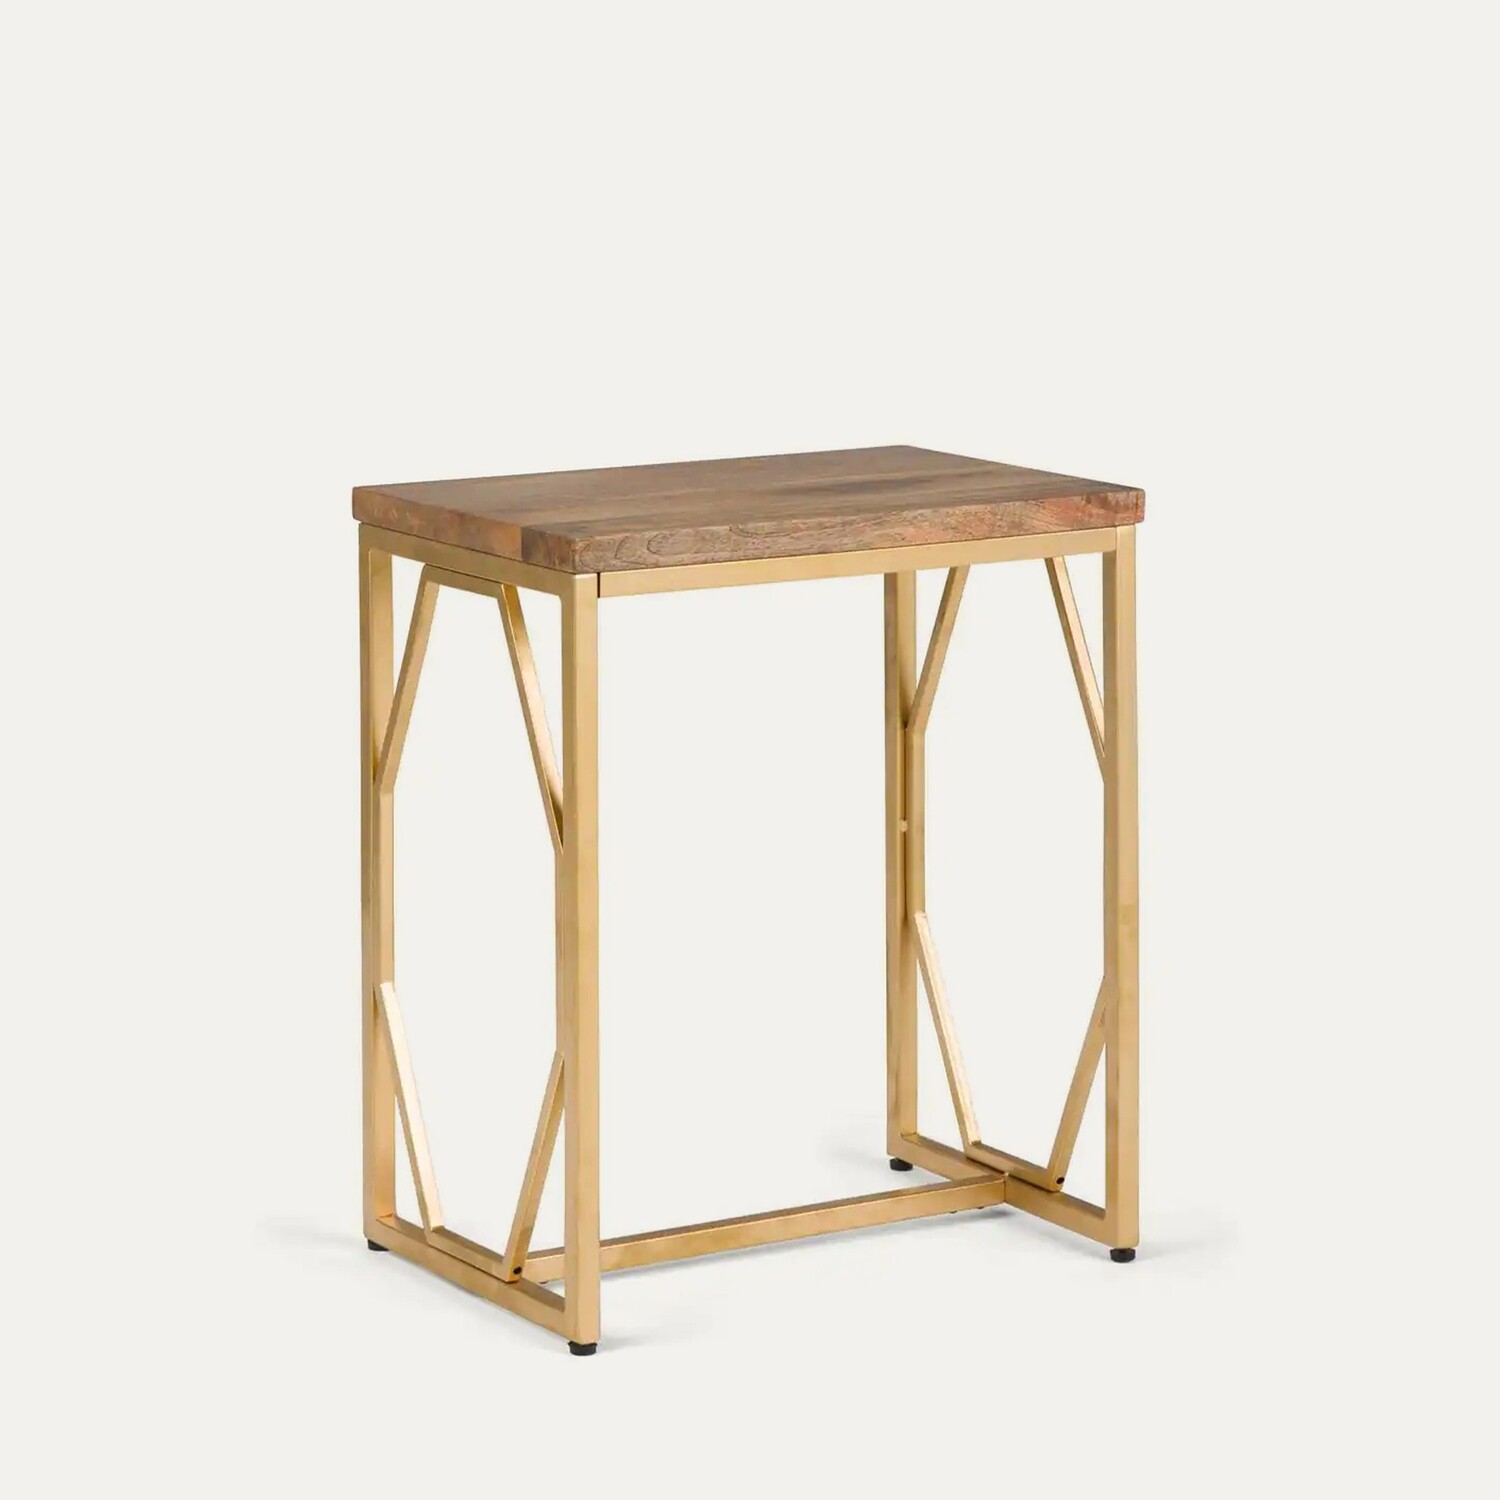 Corfu Table - Metal and Wood Side Table